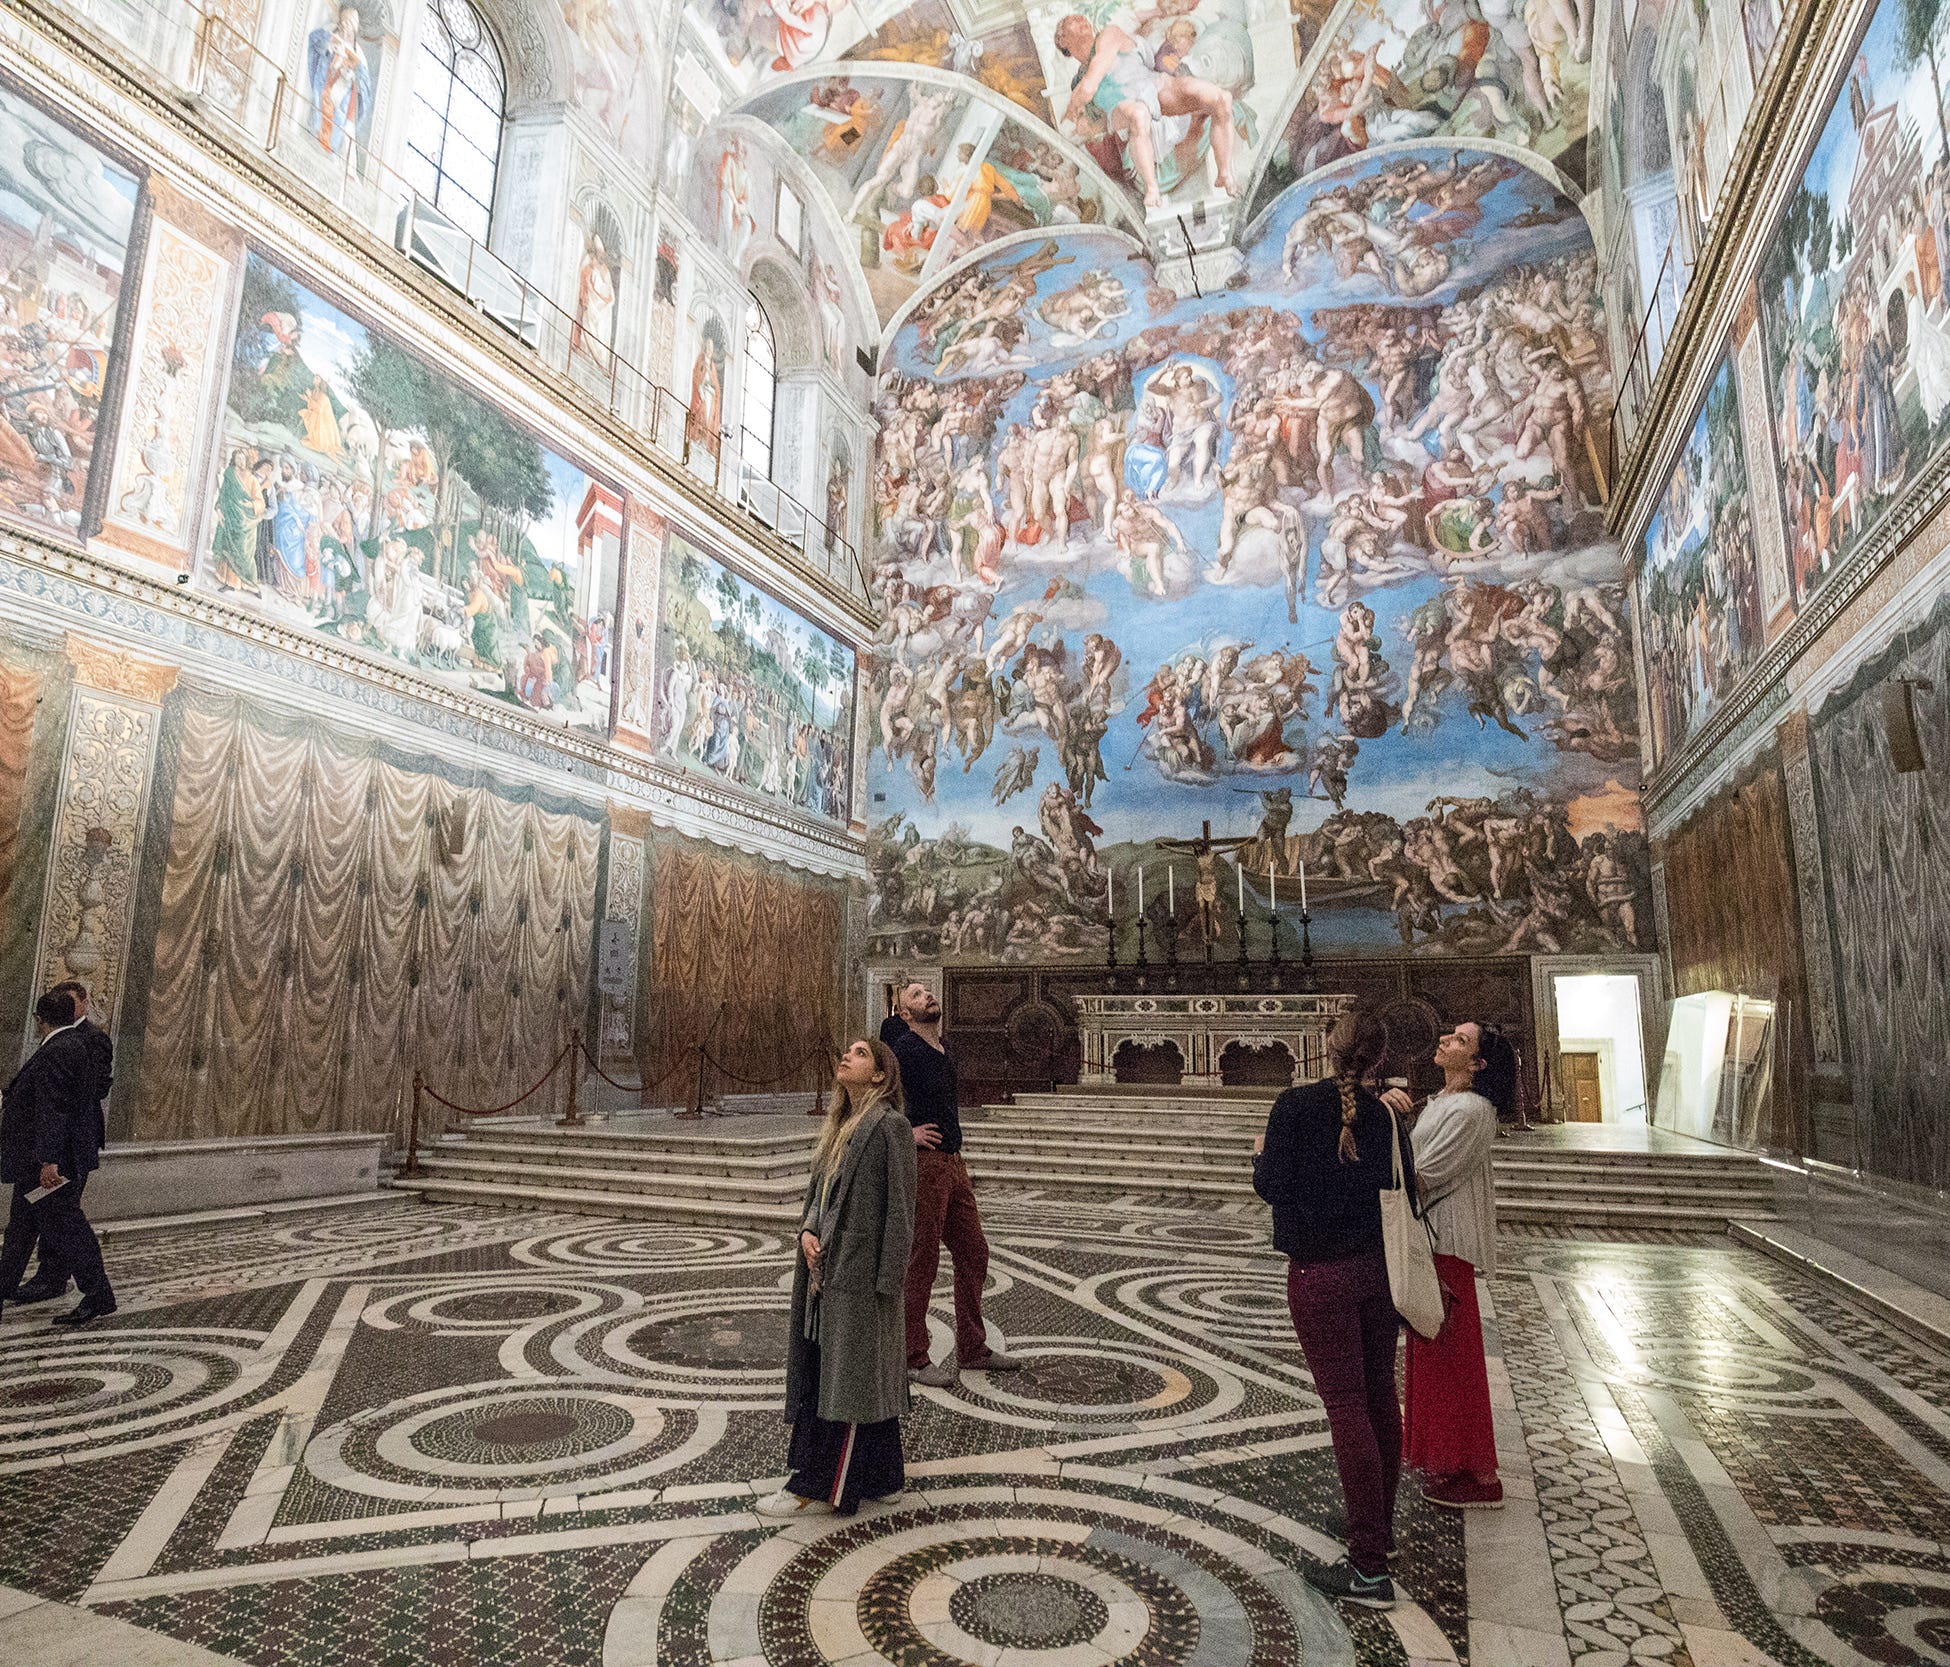 The Sistine Chapel is Michelangelo's masterpiece.